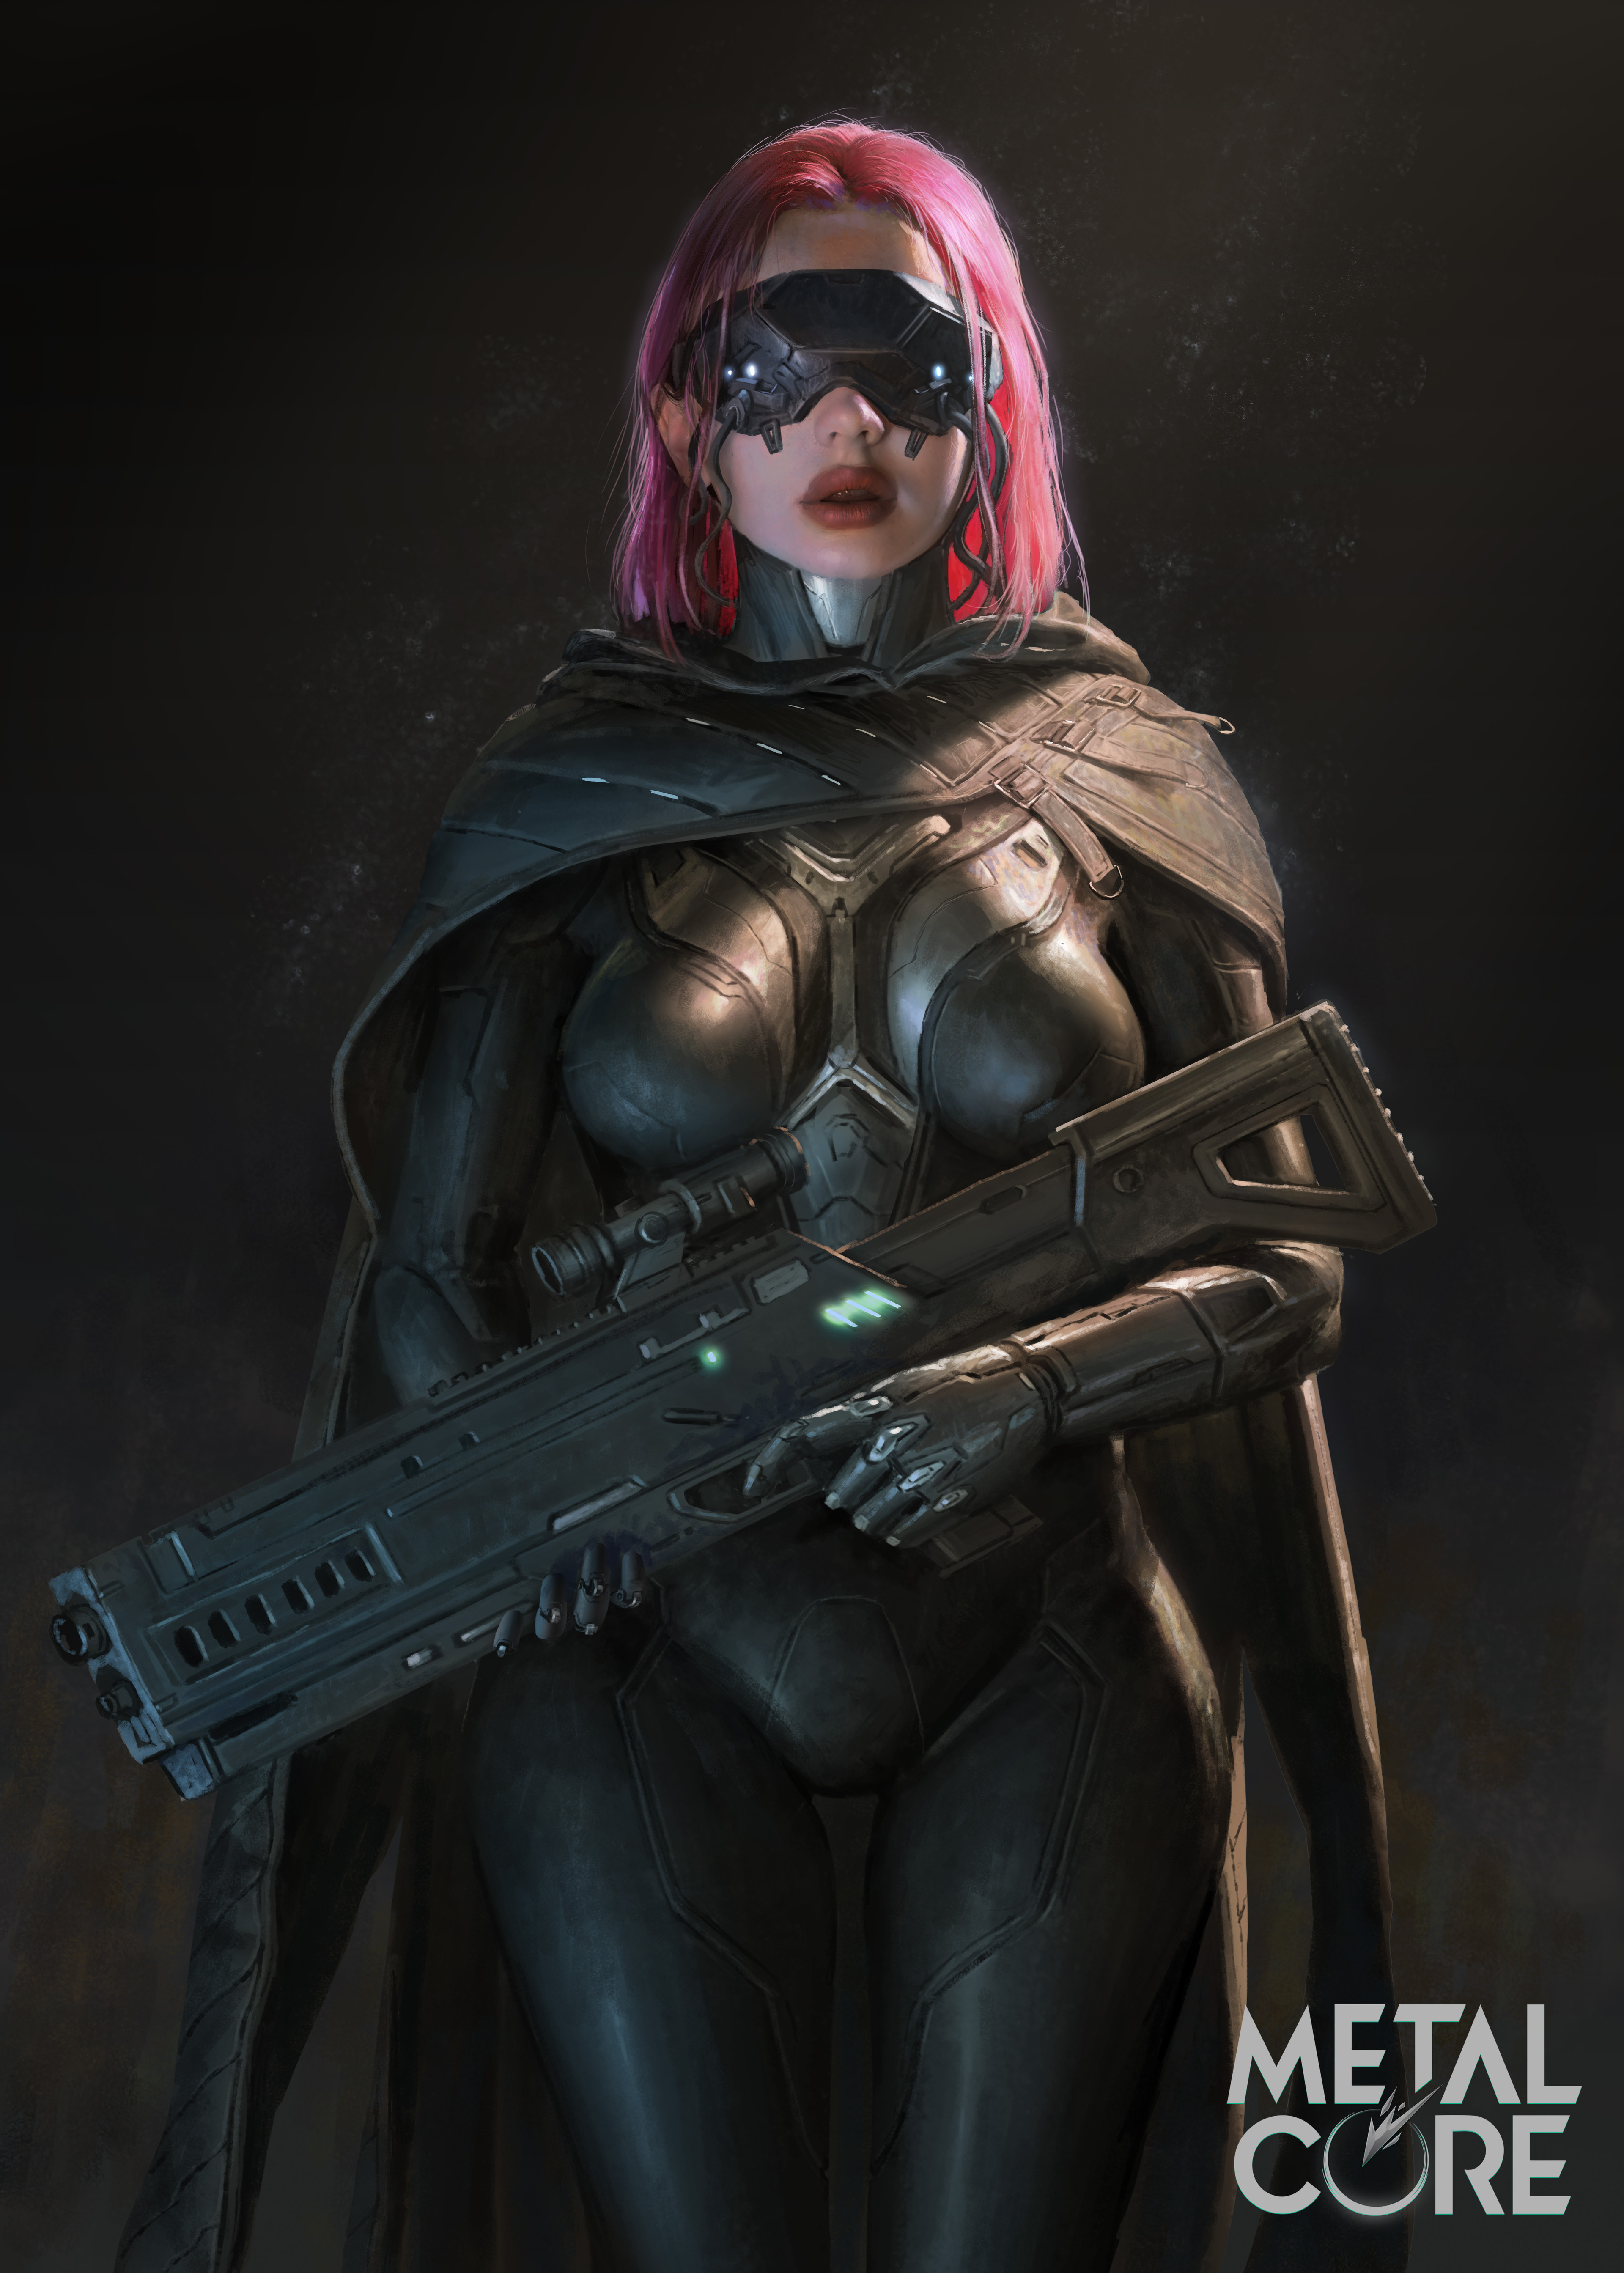 General 3840x5374 artwork women digital art weapon Futuristic Weapons girls with guns pink hair red lipstick gun